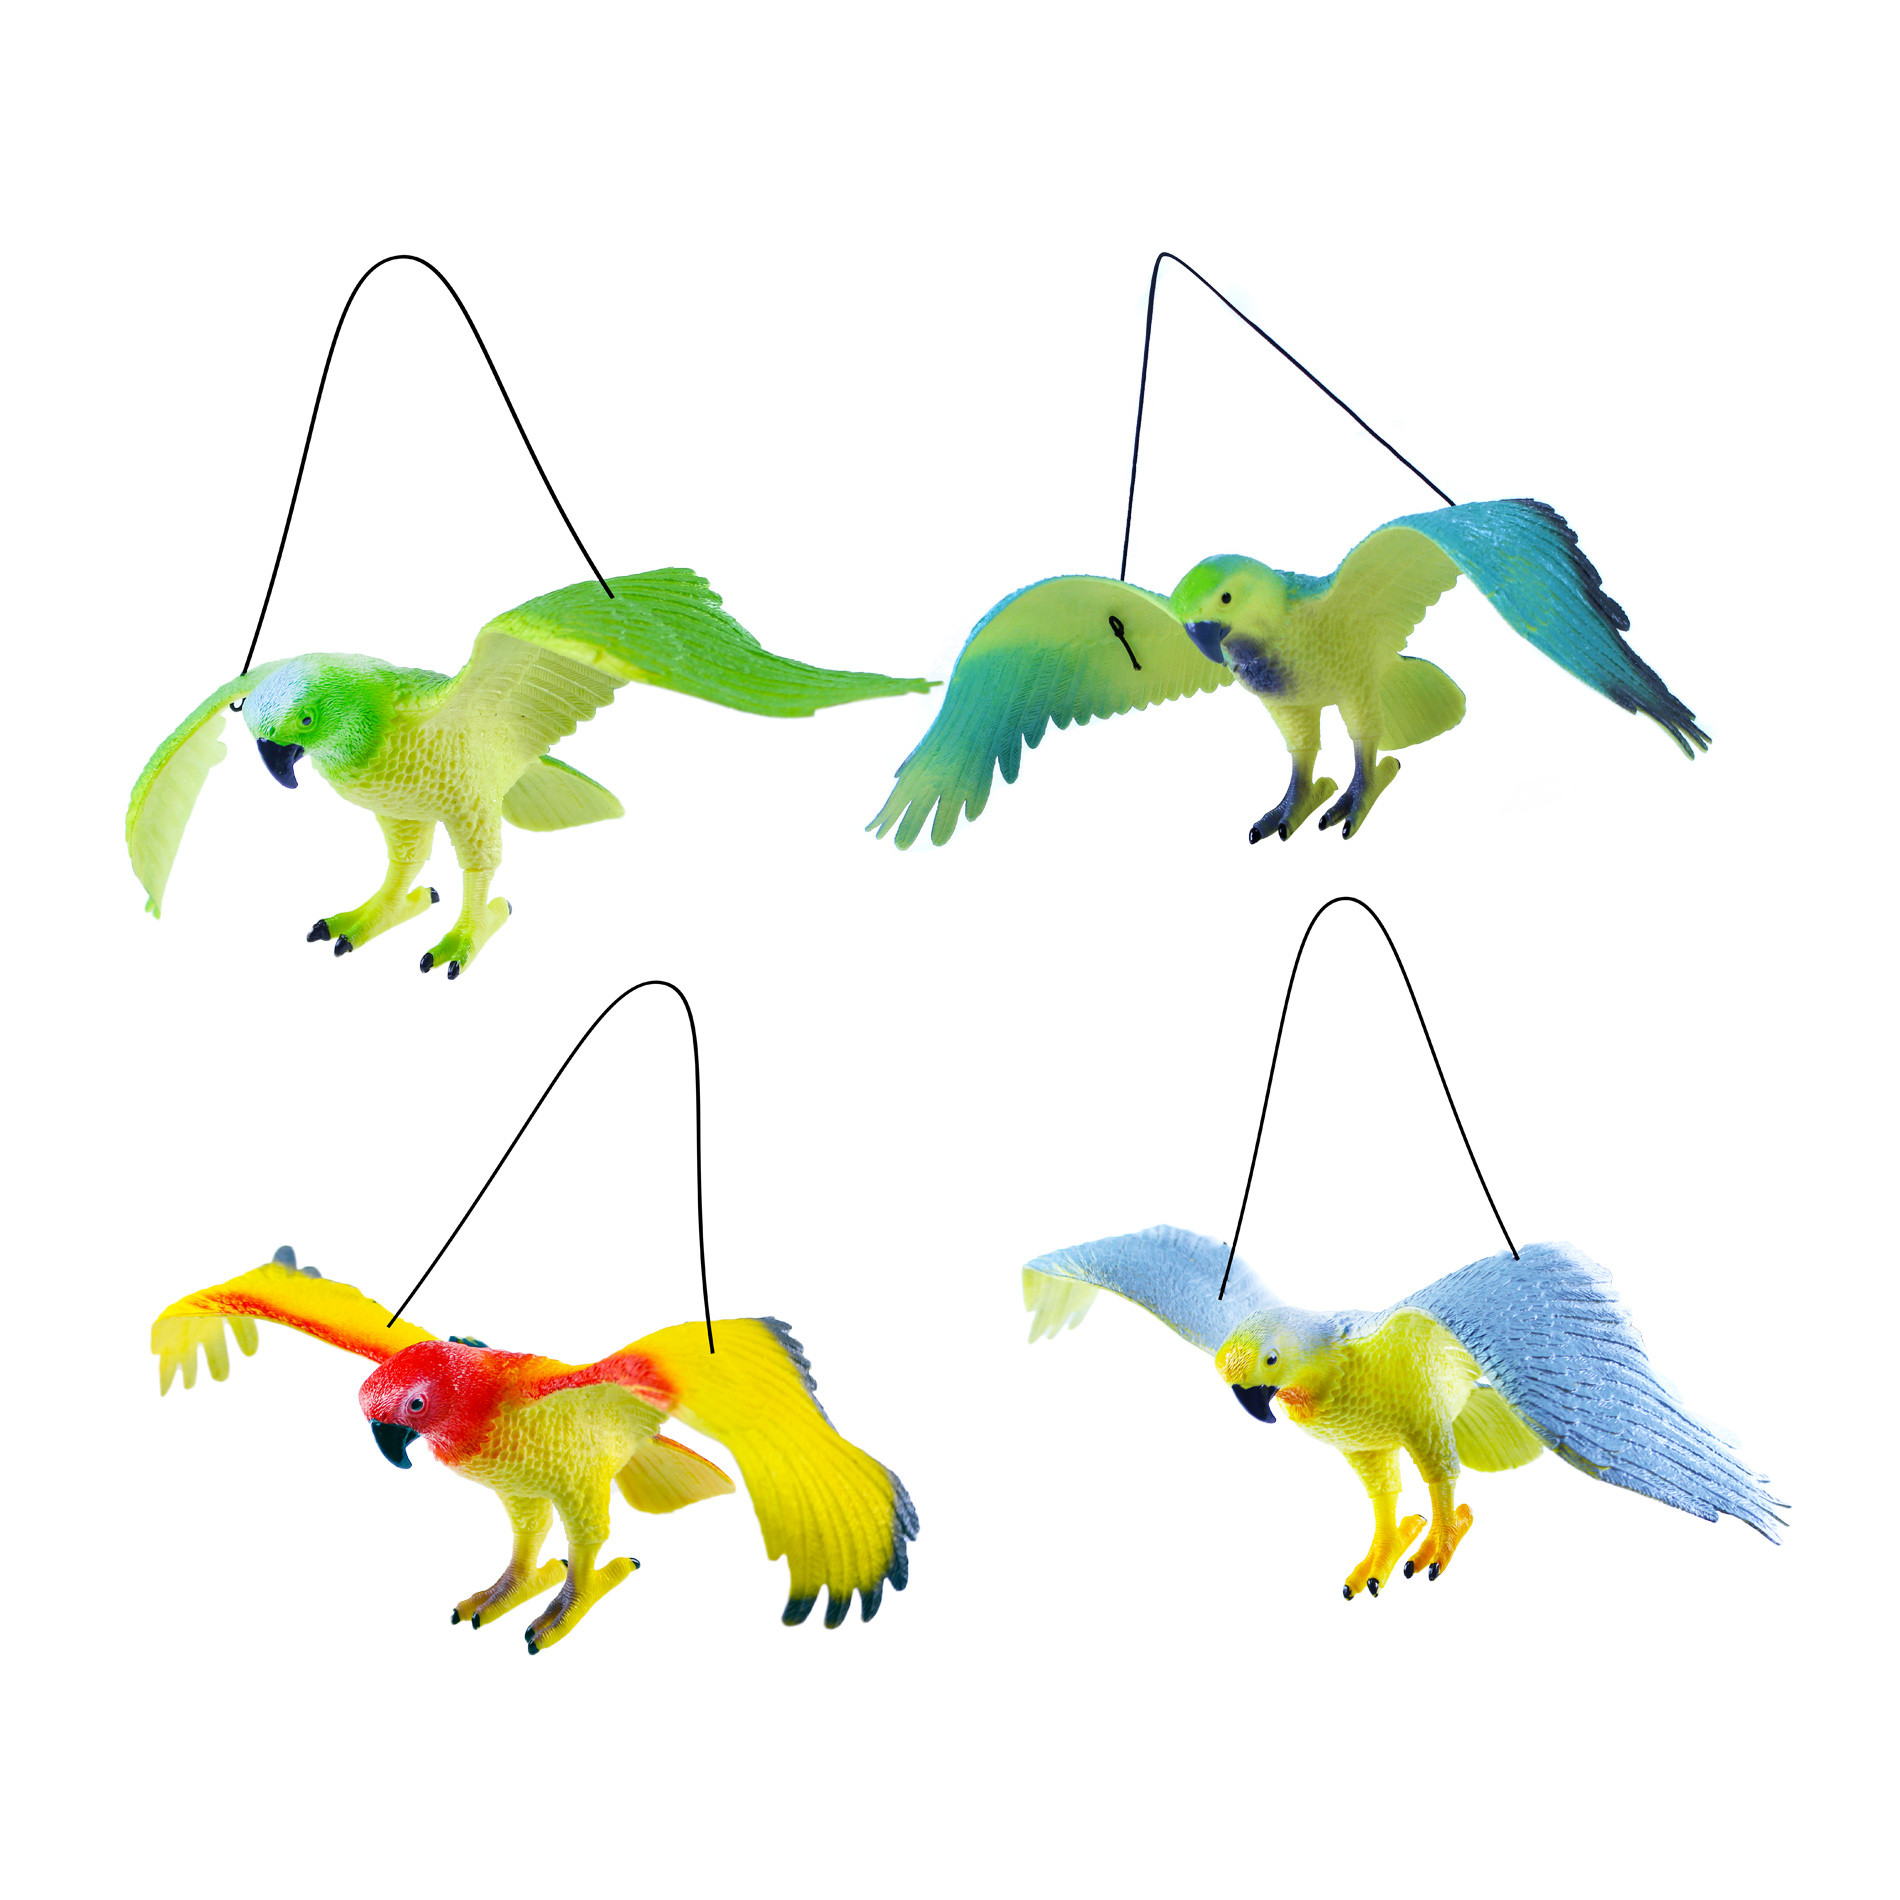 the parrots, 4 types